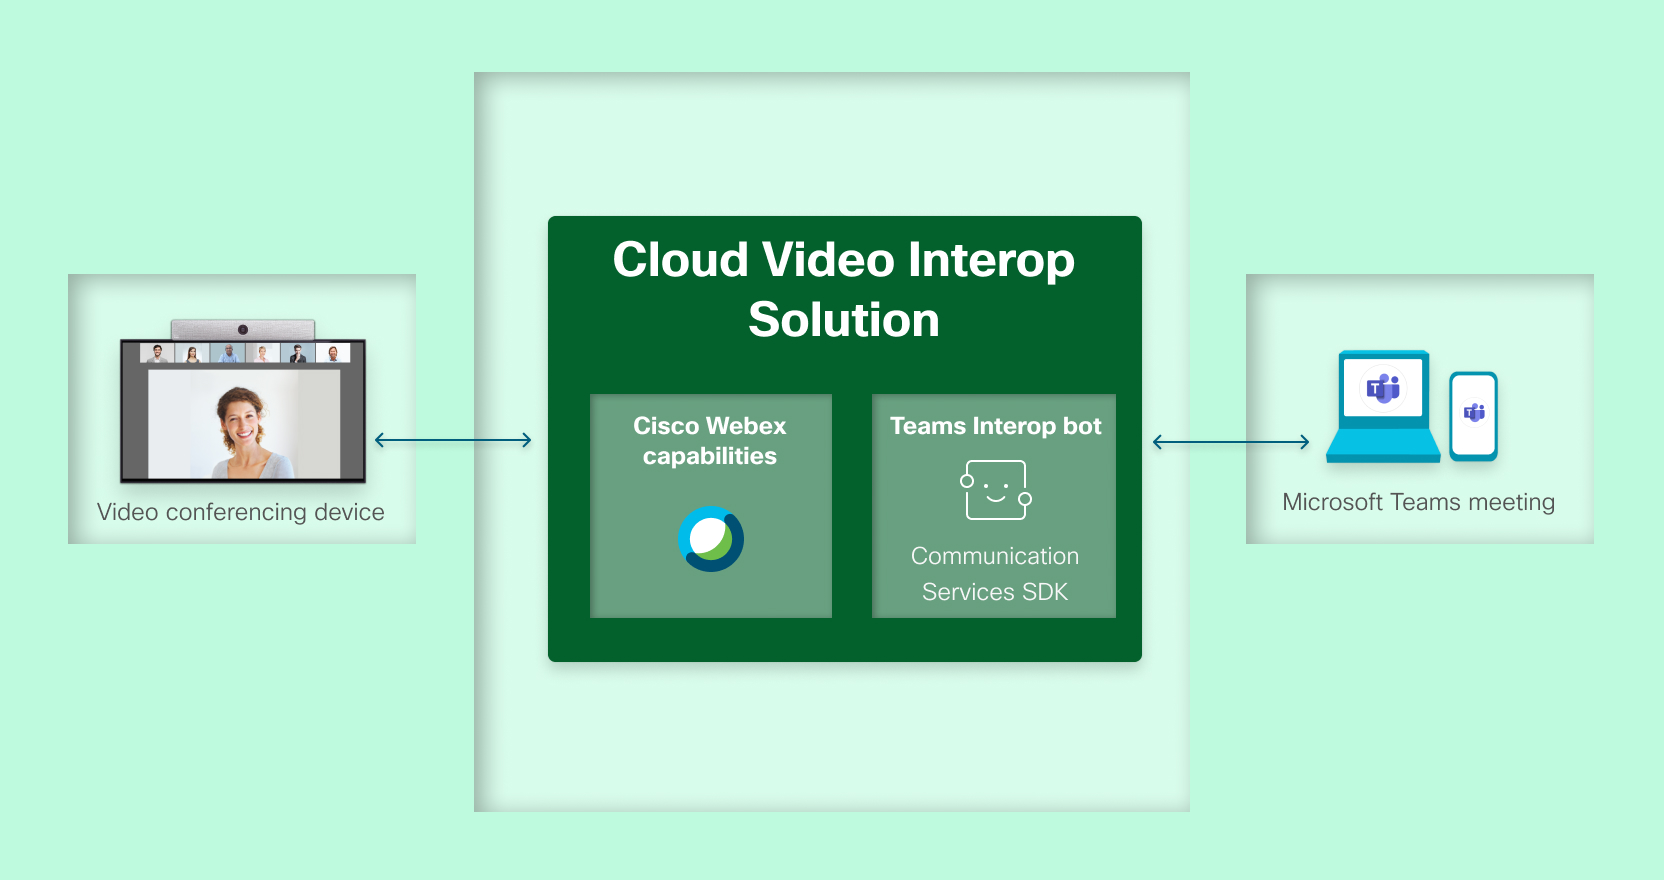 CVI Architecture billede baseret på https://docs.microsoft.com/en-us/microsoftteams/cloud-video-interop